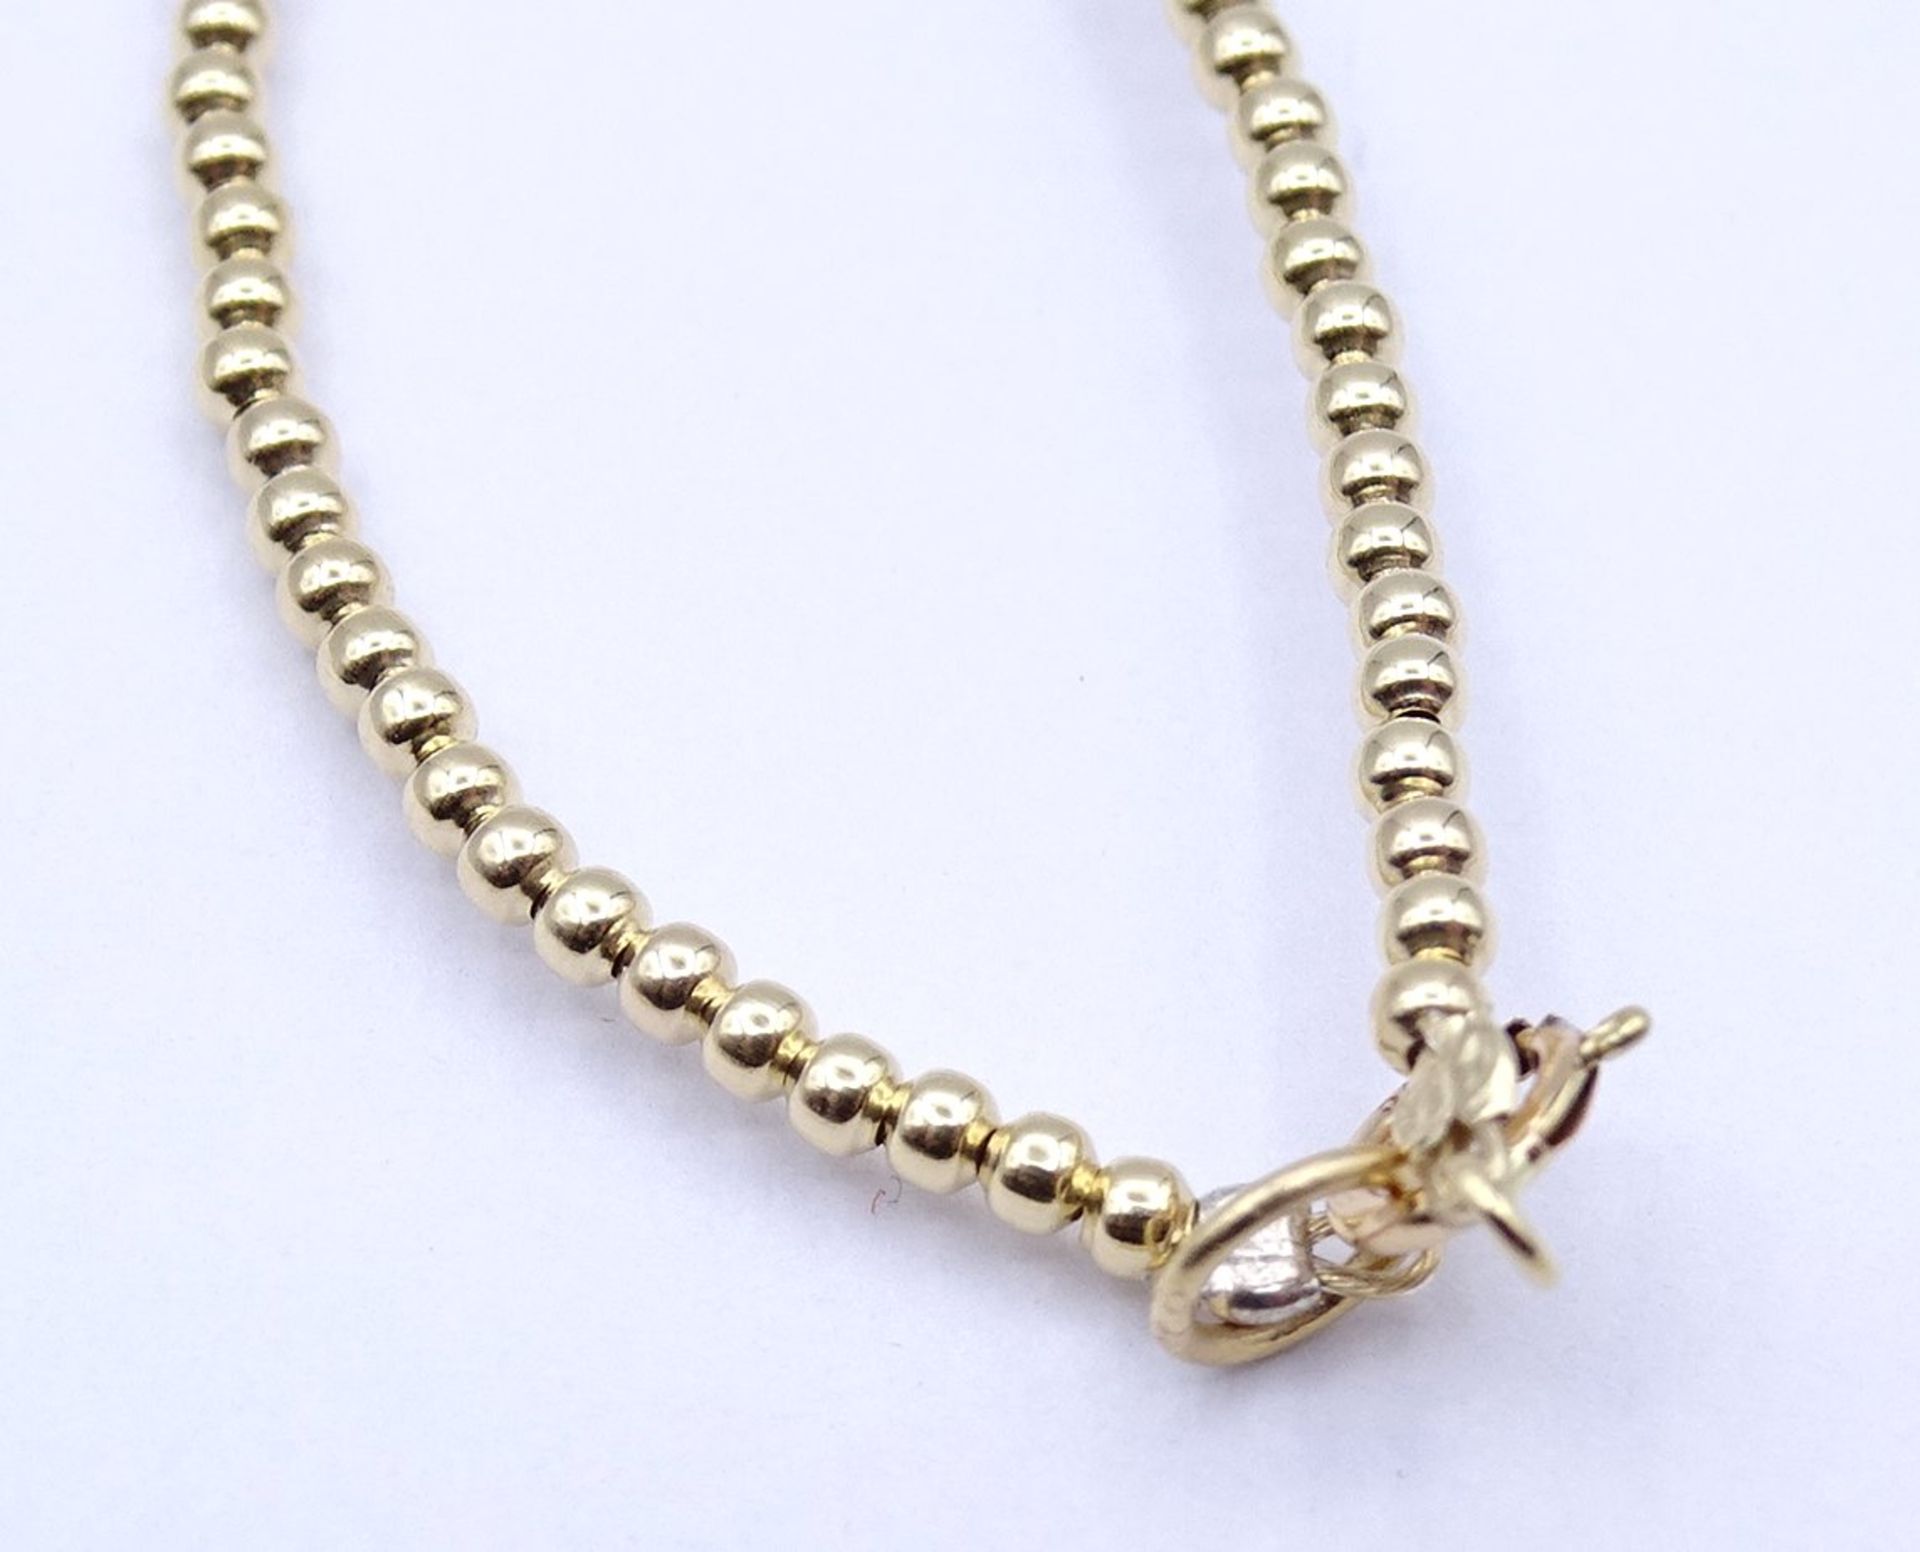 Halskette, GG 585/000 mit Diamant 0,07ct., L. 40,5cm, 1,45g. - Image 2 of 6